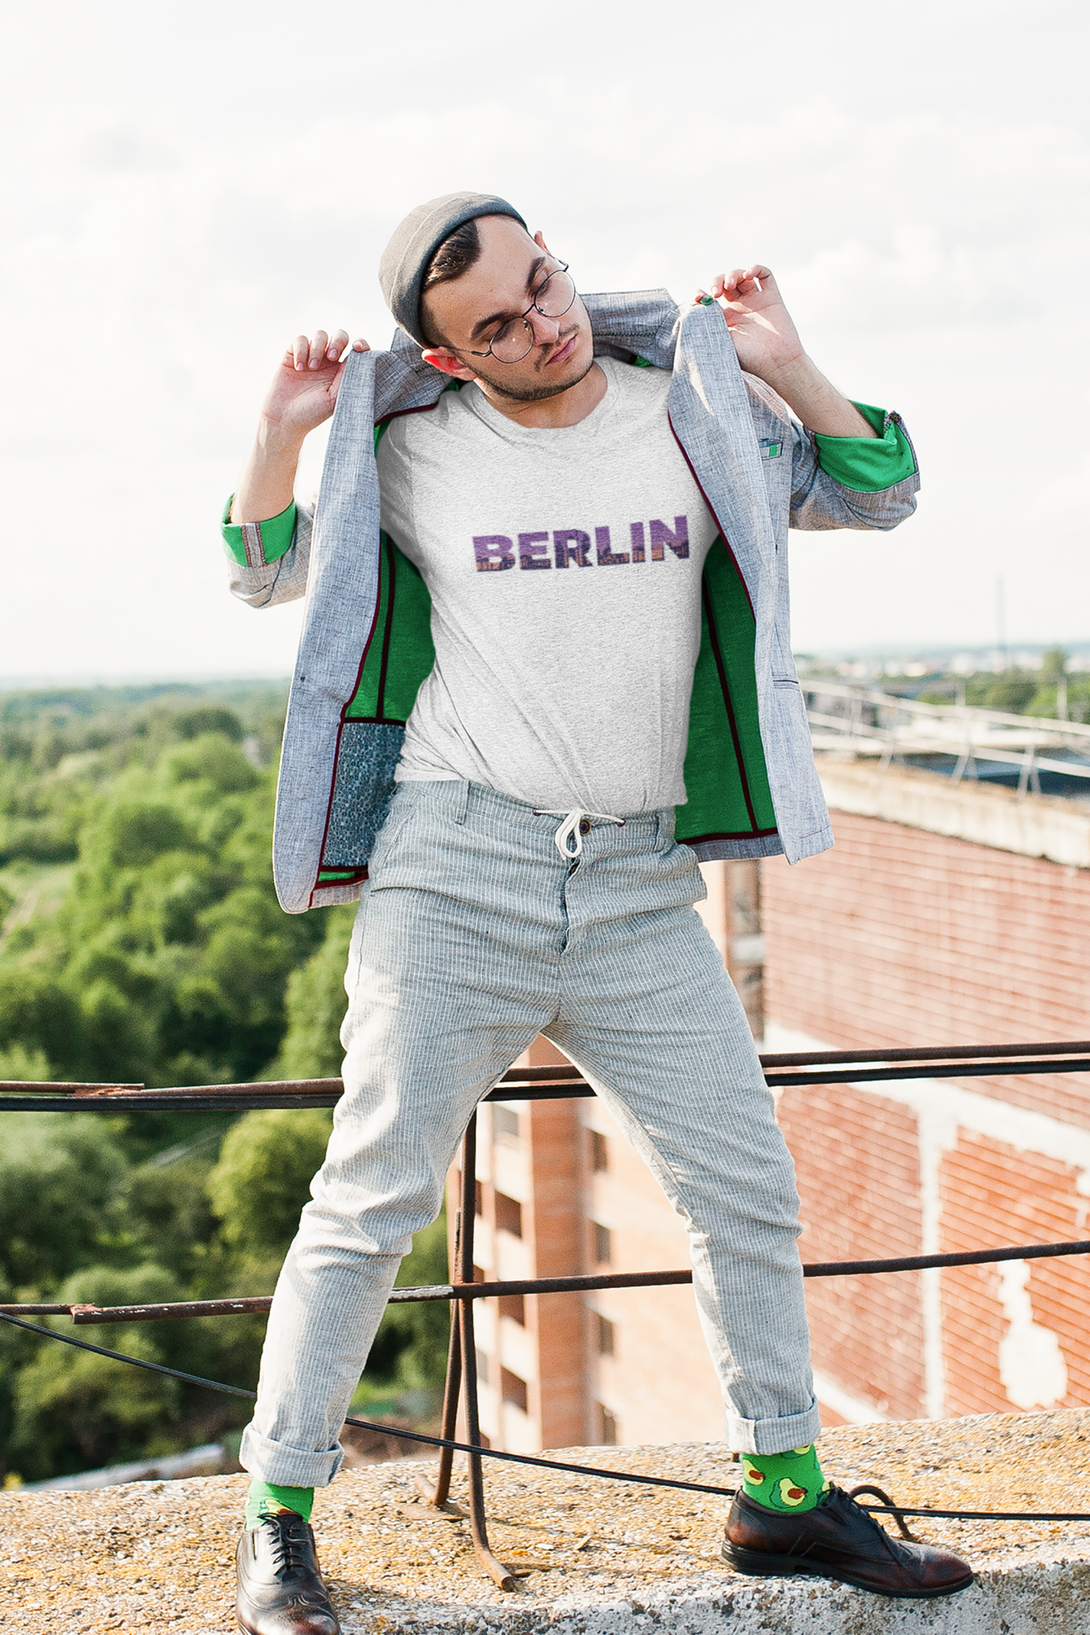 Berlin Skyline Printed T-Shirt For Men - WowWaves - 5